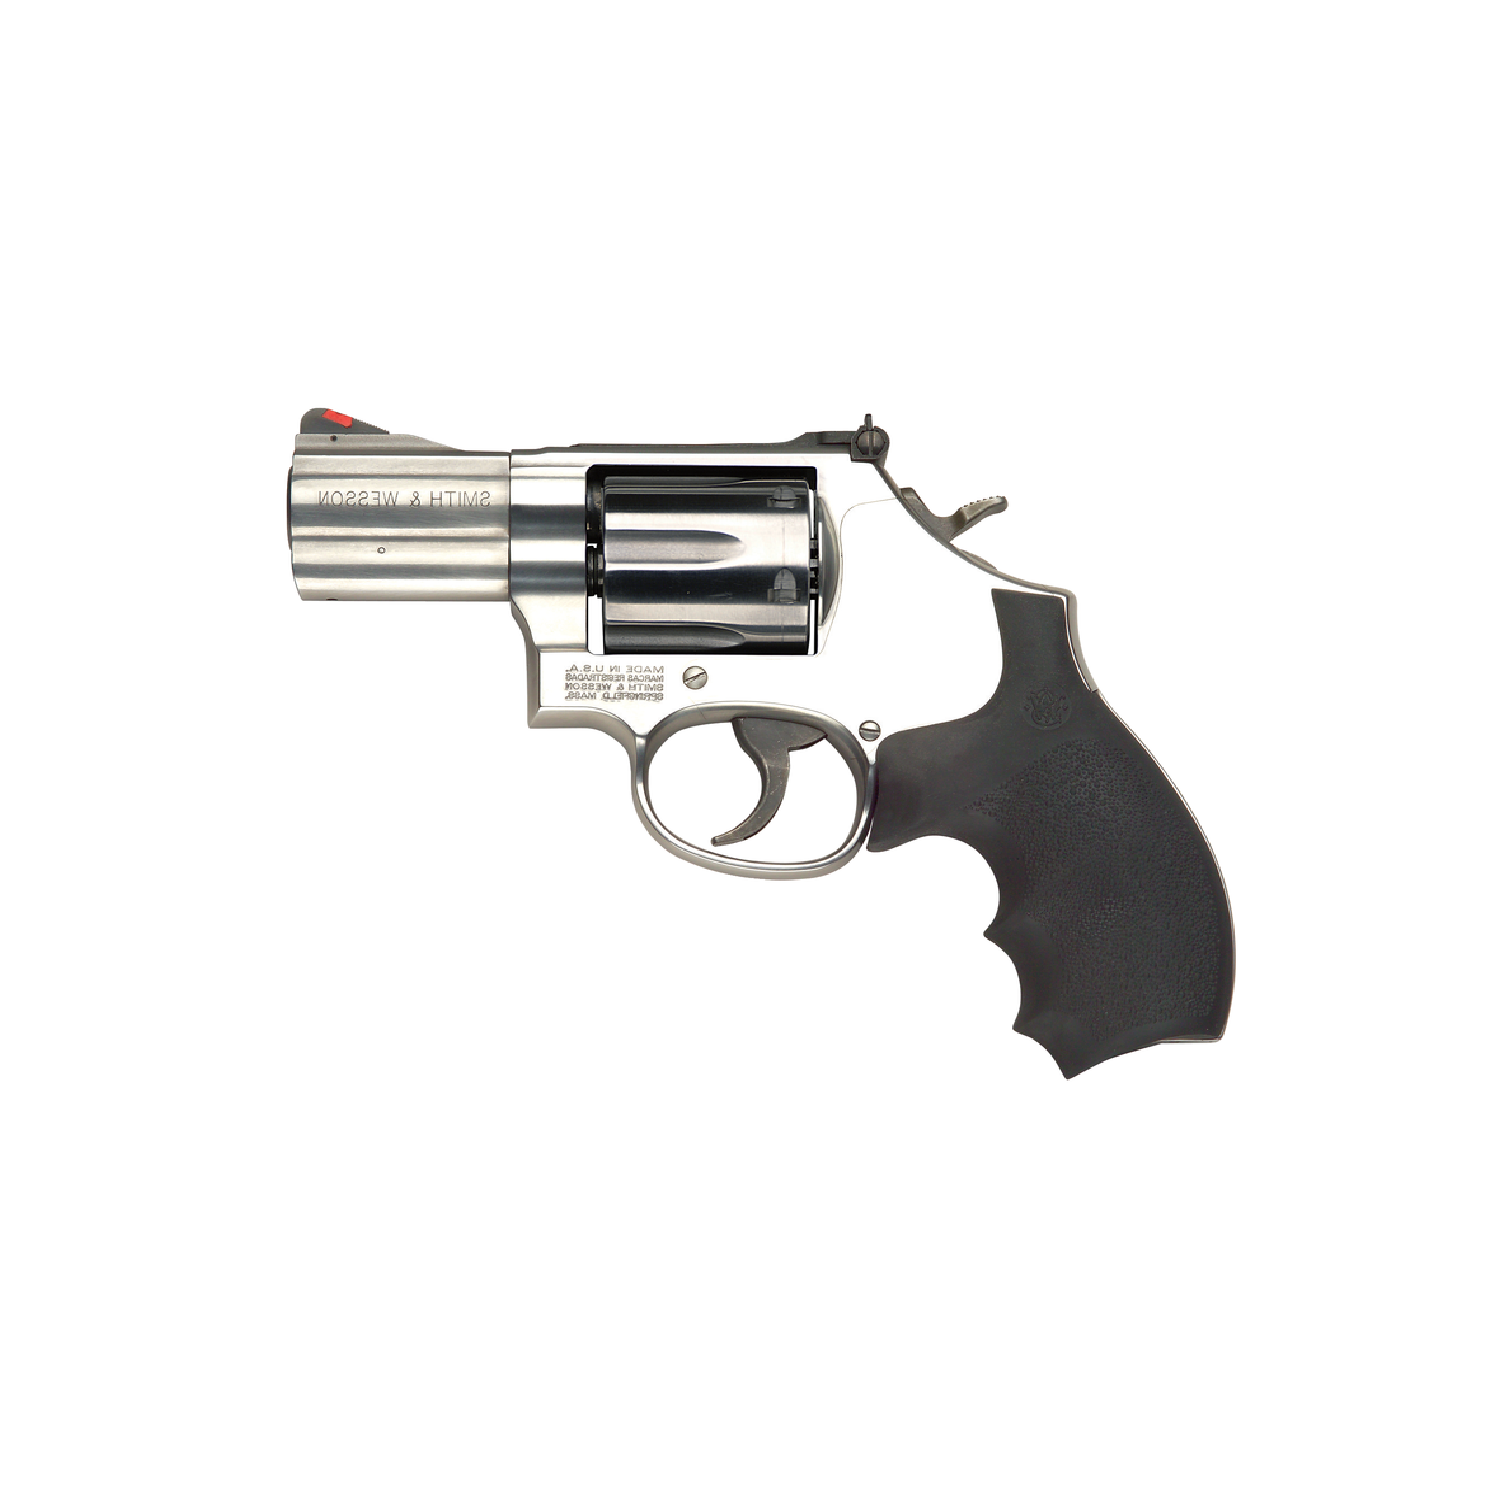 Smith & Wesson Mod. 686 Plus, .357 Magnum